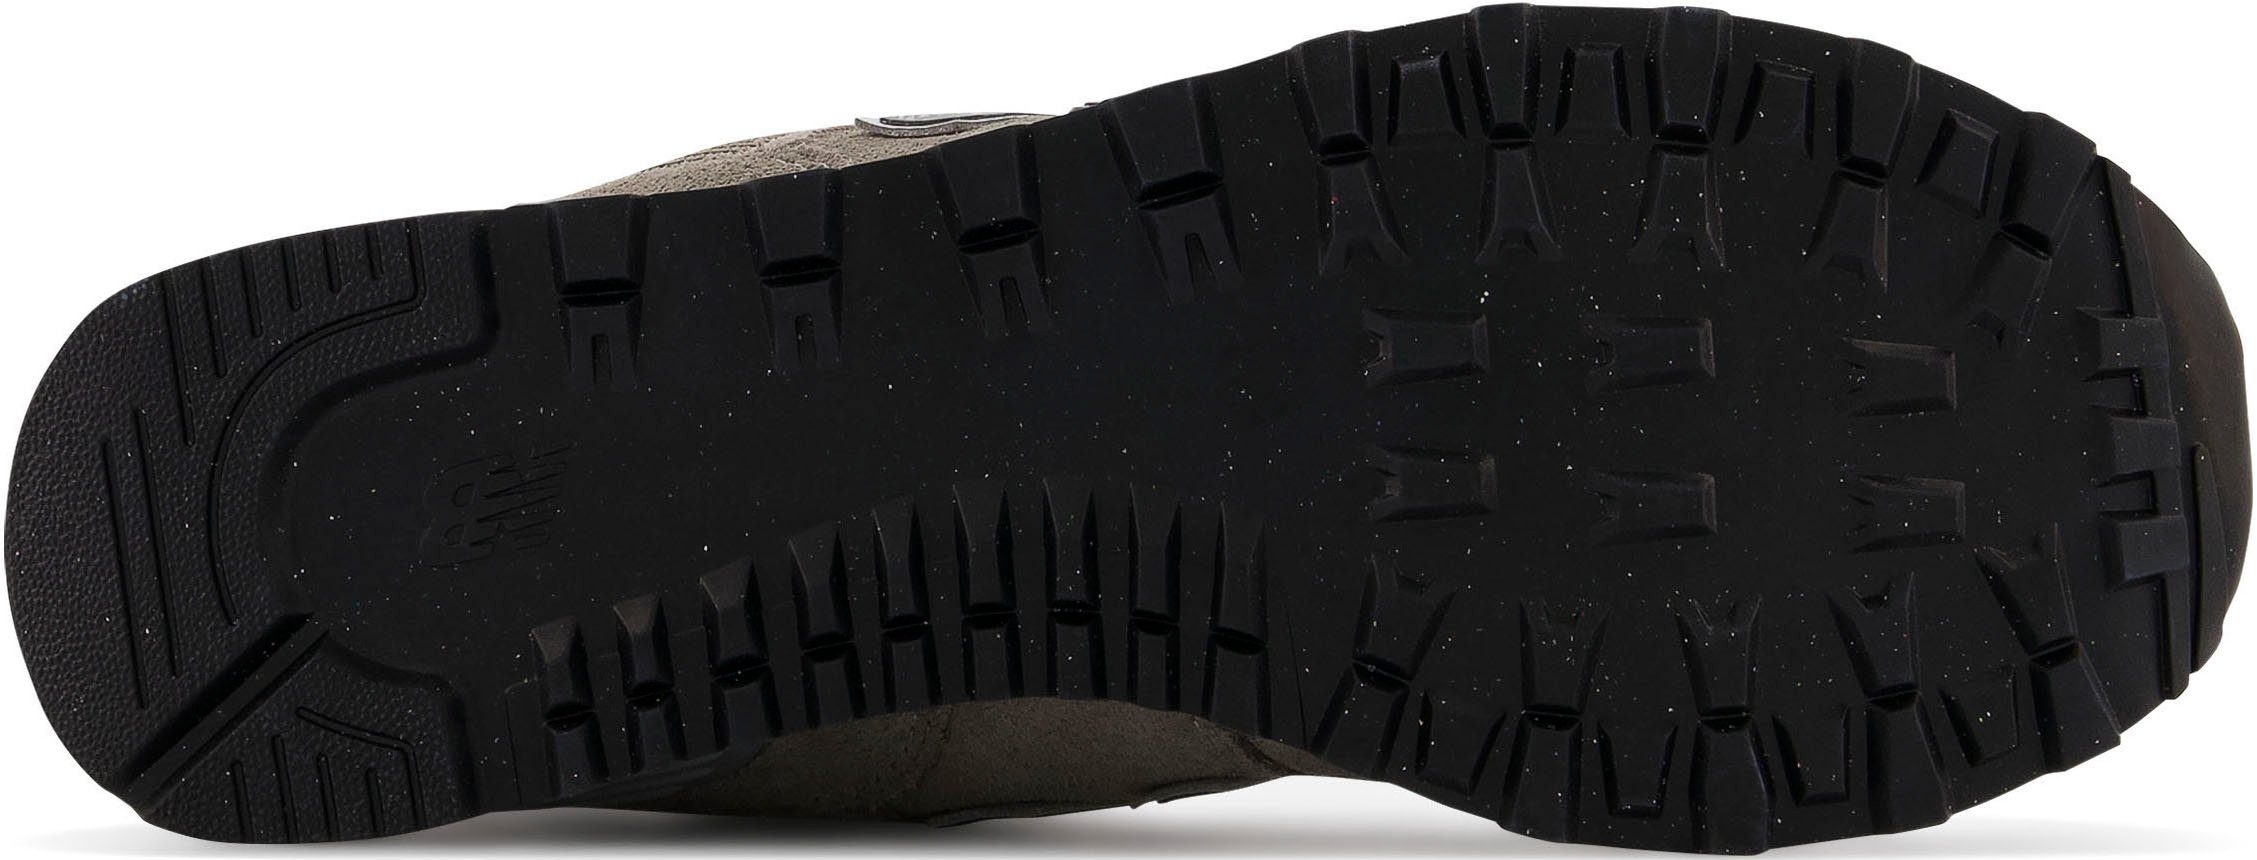 Sneaker New Core Balance WL574 dunkelgrau-grau-weiß